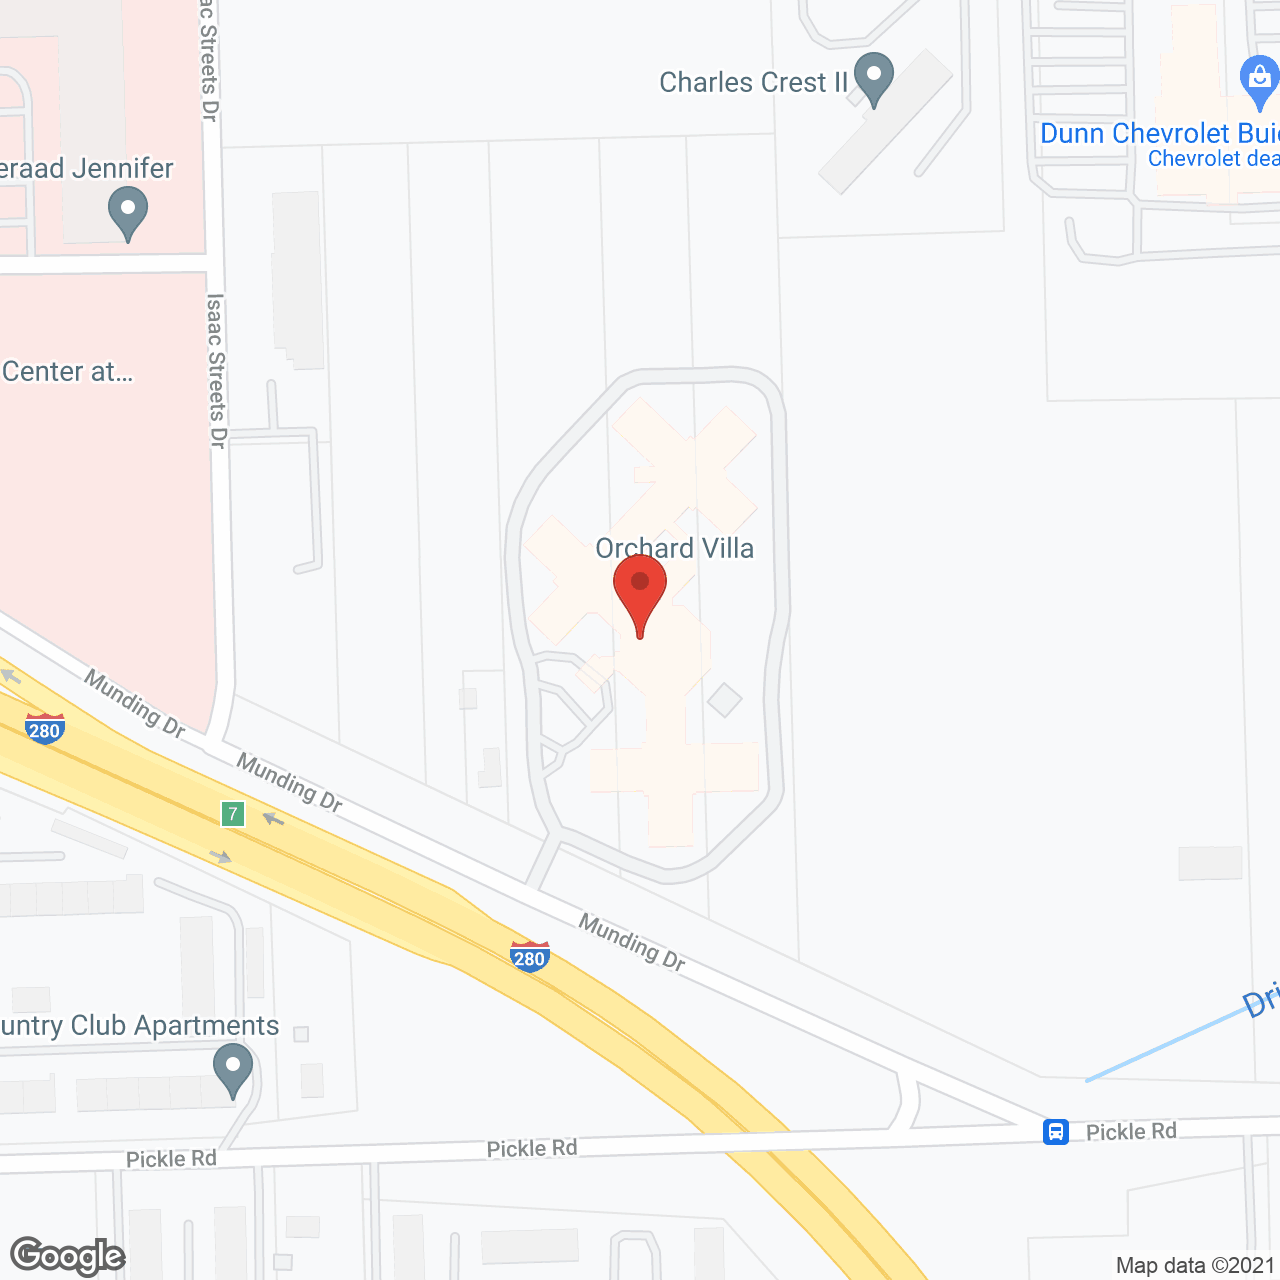 Orchard Villa in google map